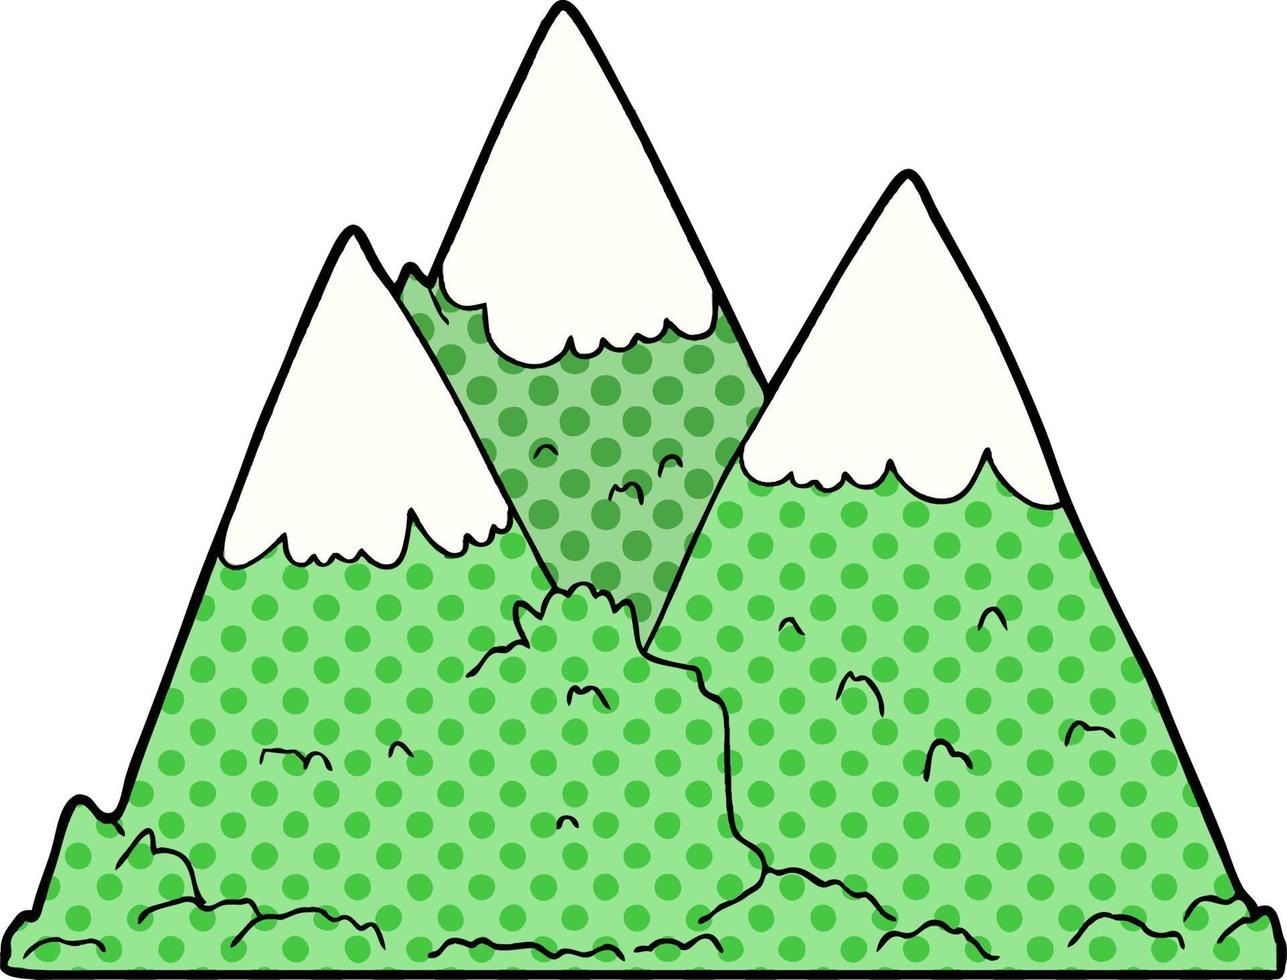 montañas verdes de dibujos animados vector